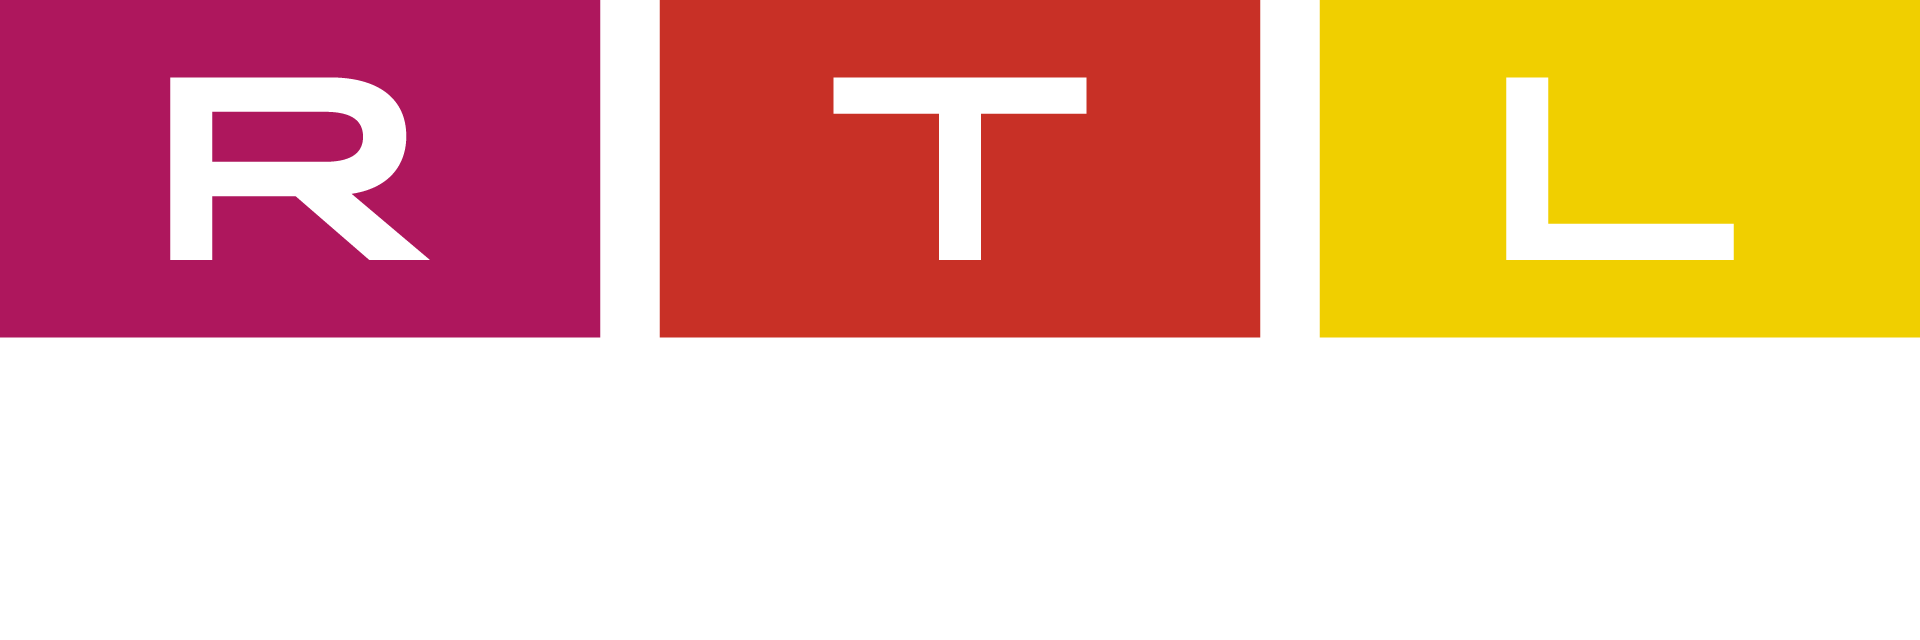 https://rtl.hu/images/RTL2_logo.png